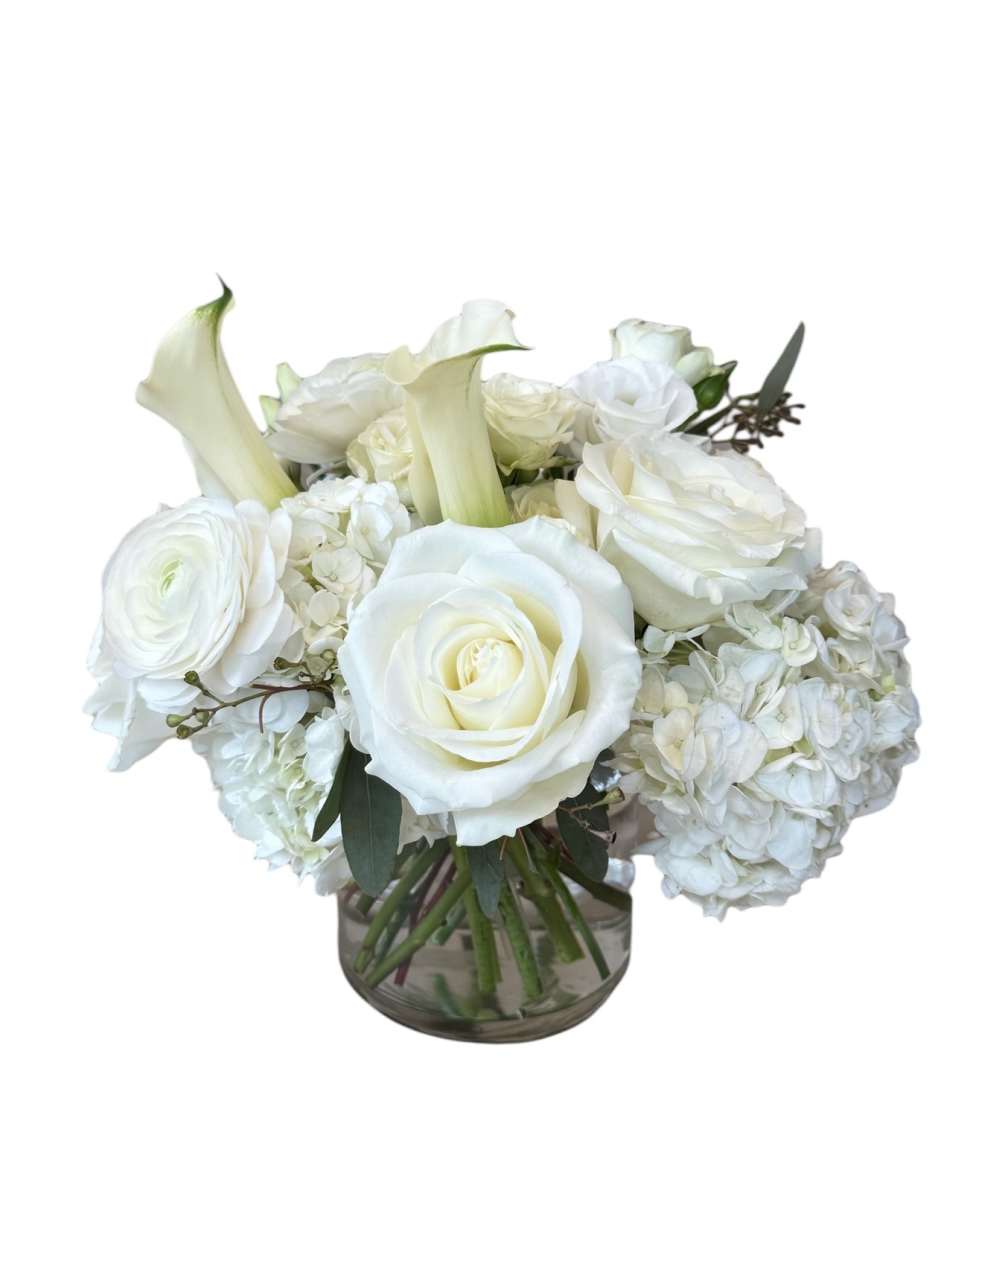 White rose, white hydrangea, white ranunculus, white calla lily and white lisianthus